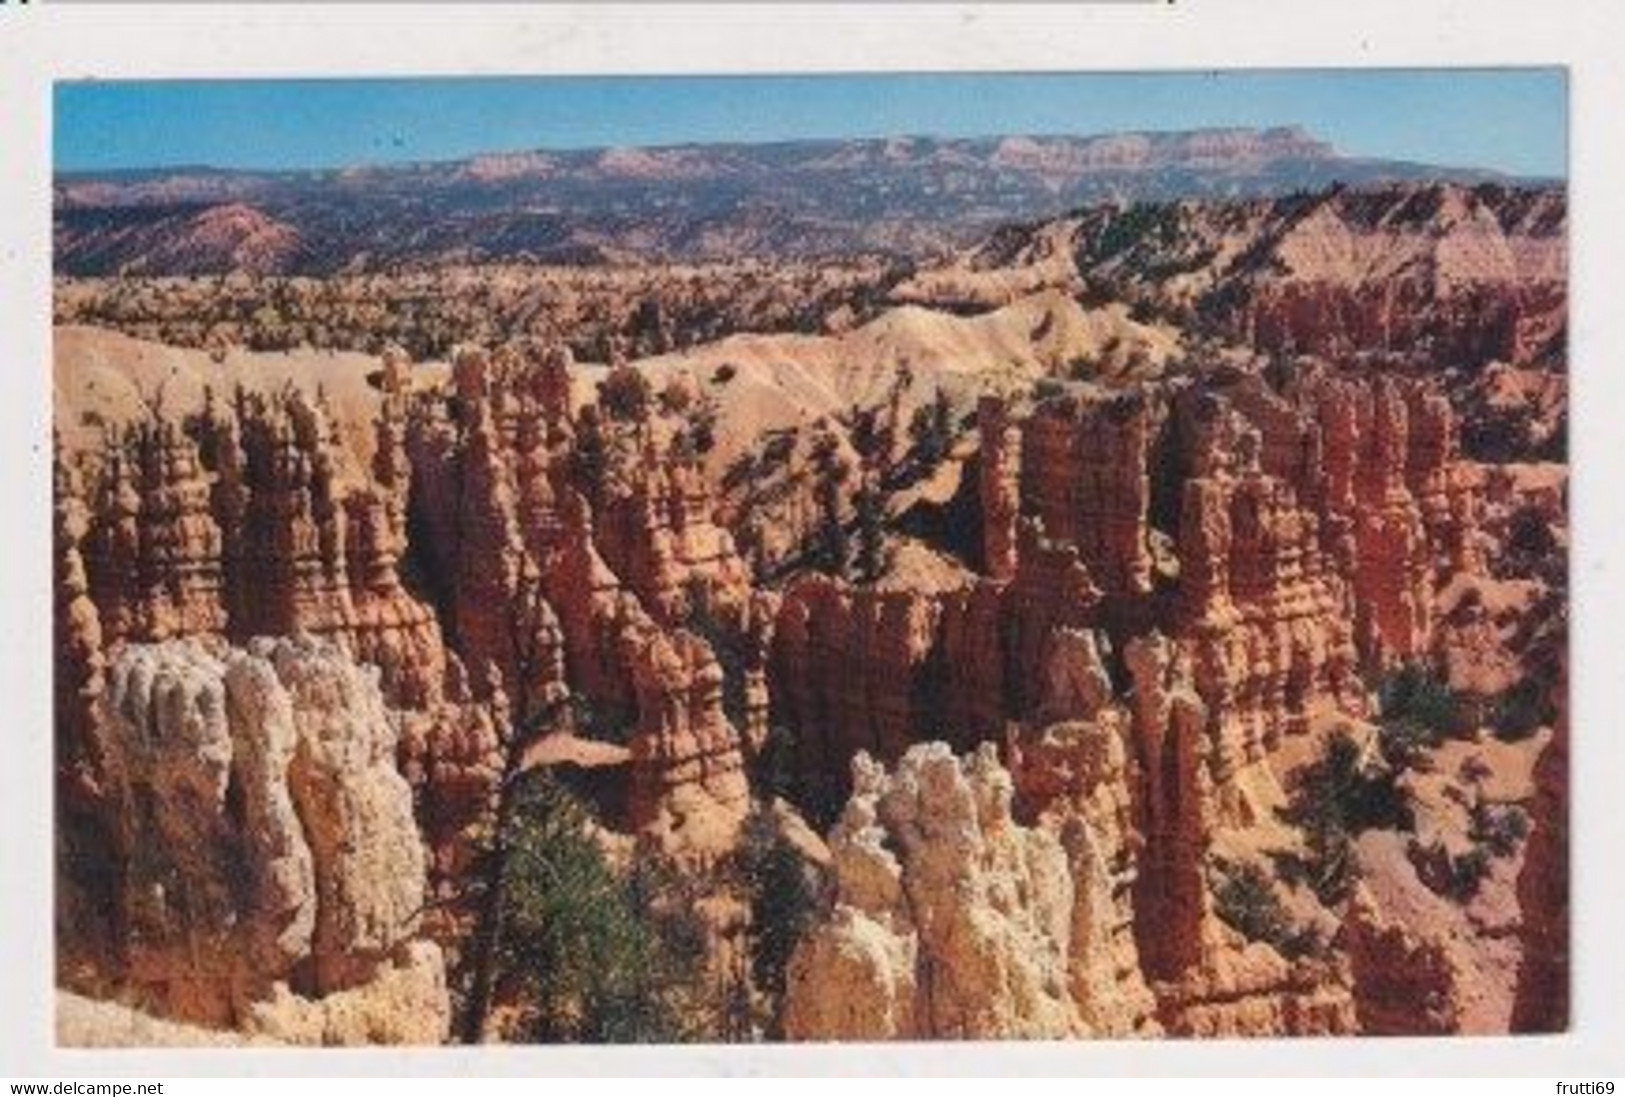 AK 019006 USA - Utah - Bryce Canypn National Park - Fairyland - Bryce Canyon